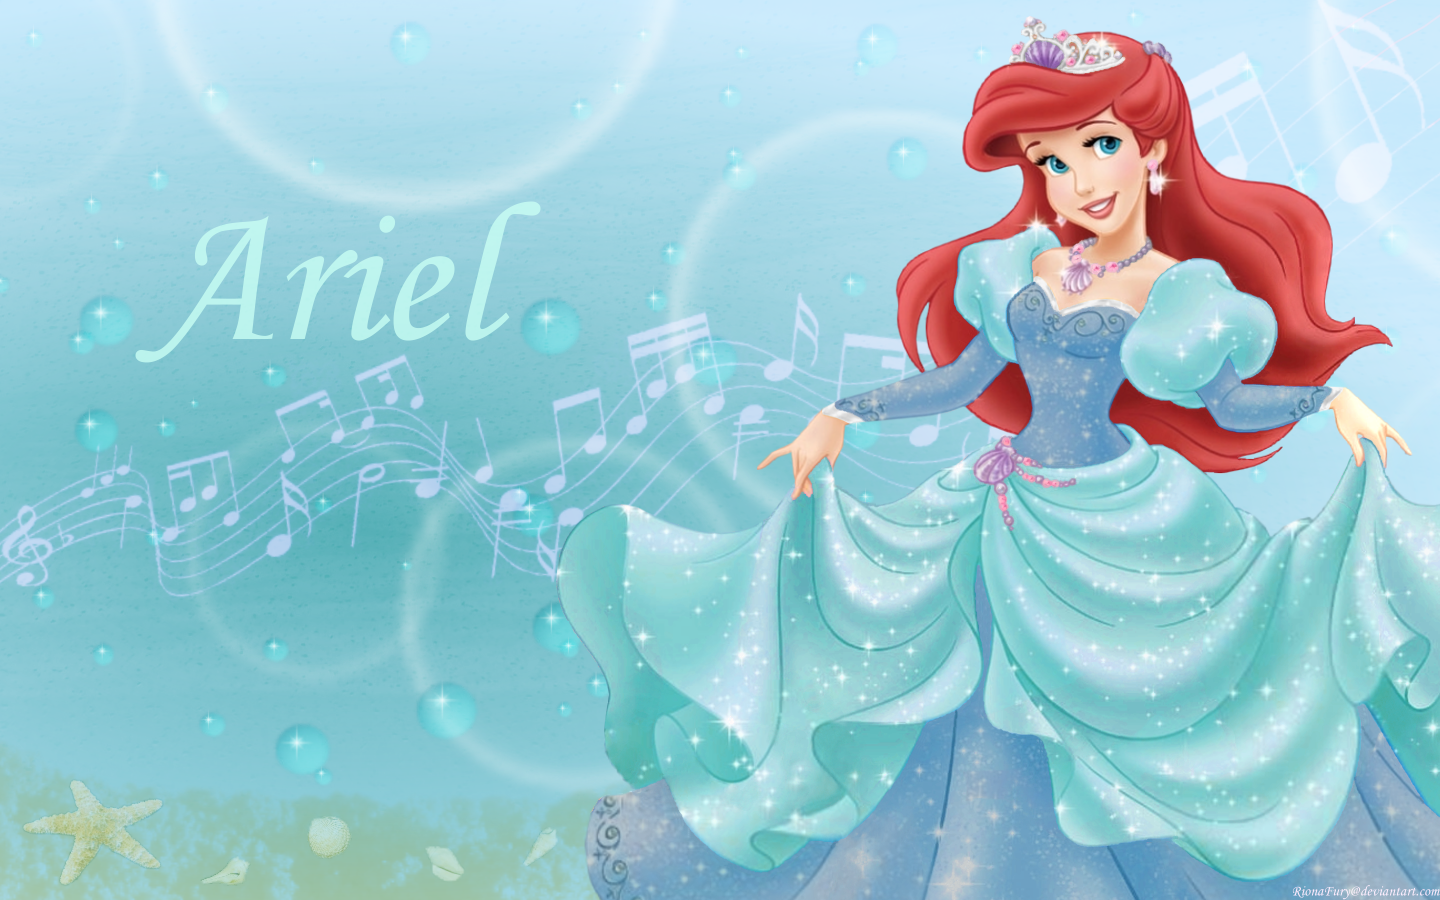 The Little Mermaid Wallpaper: Ariel in Aqua and blue. Mermaid wallpaper, Disney princess ariel, Disney princess wallpaper